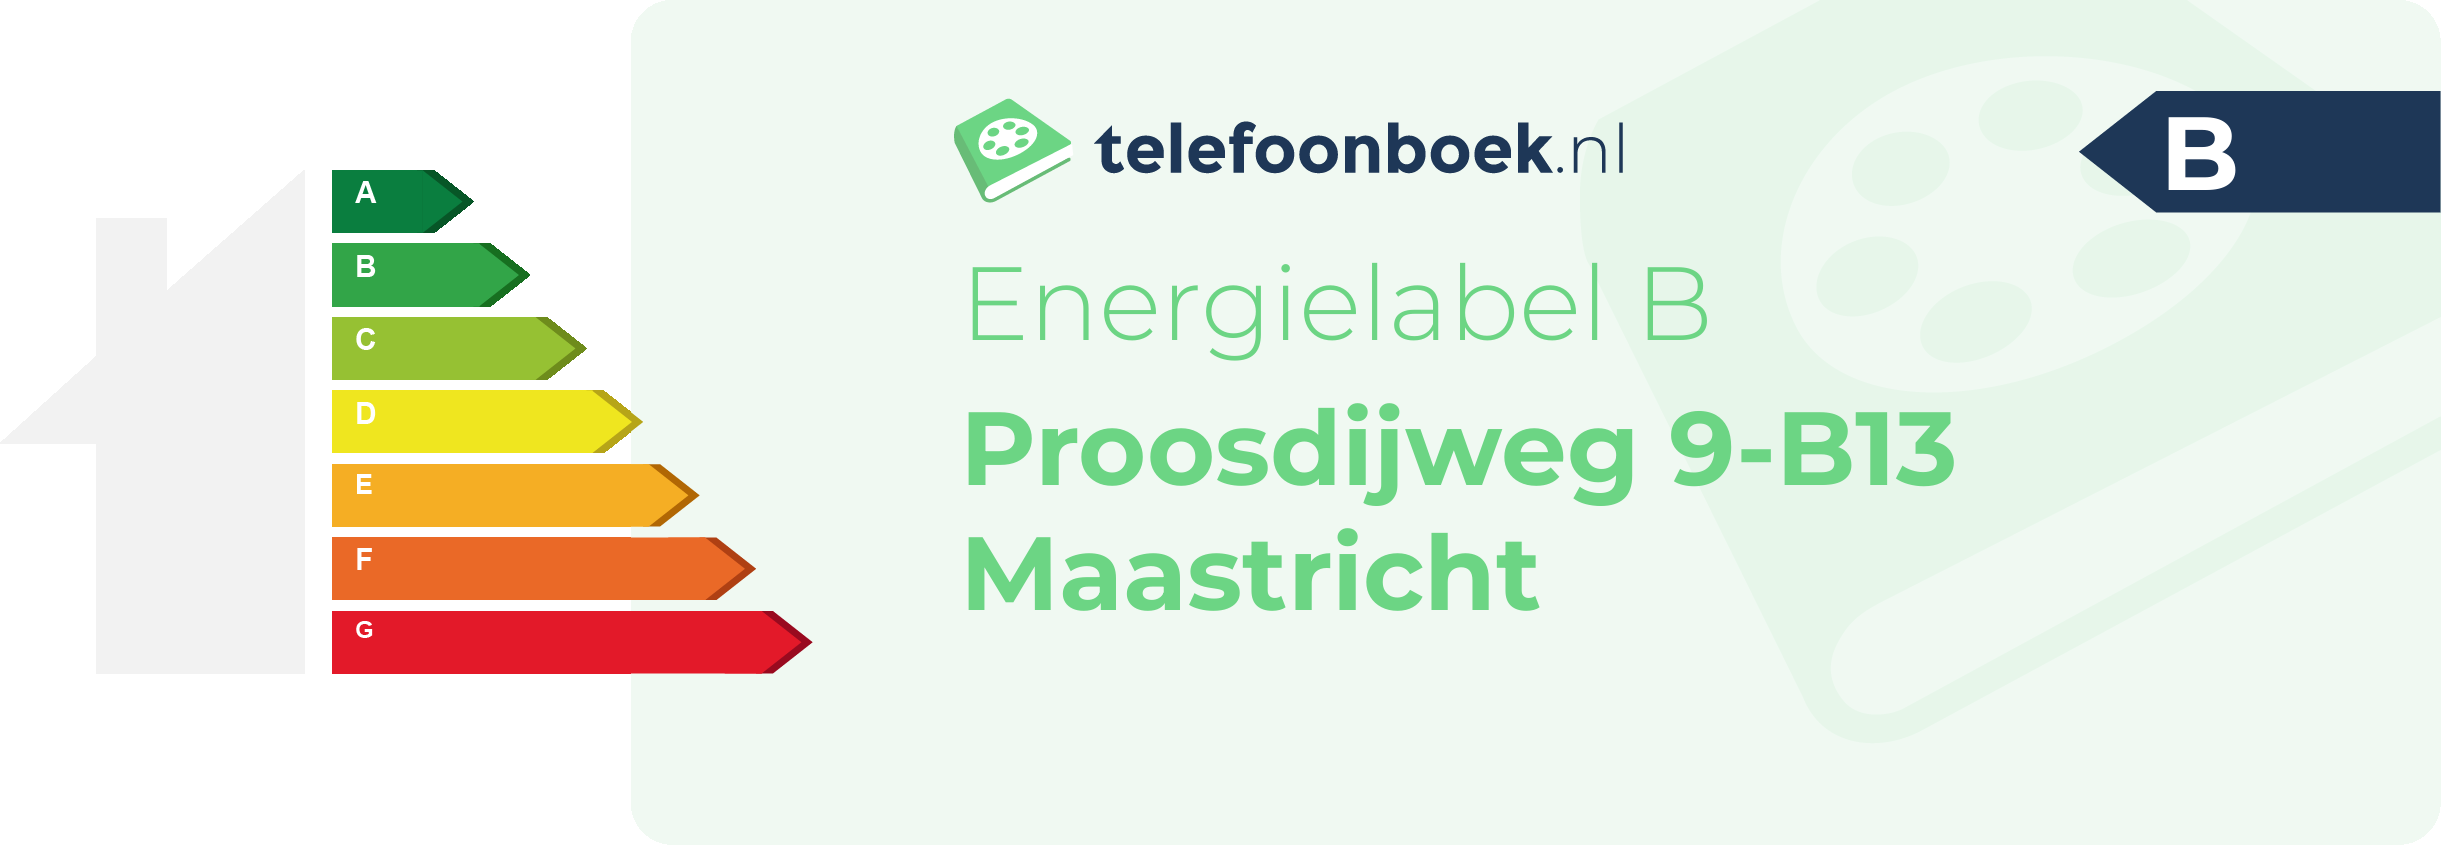 Energielabel Proosdijweg 9-B13 Maastricht